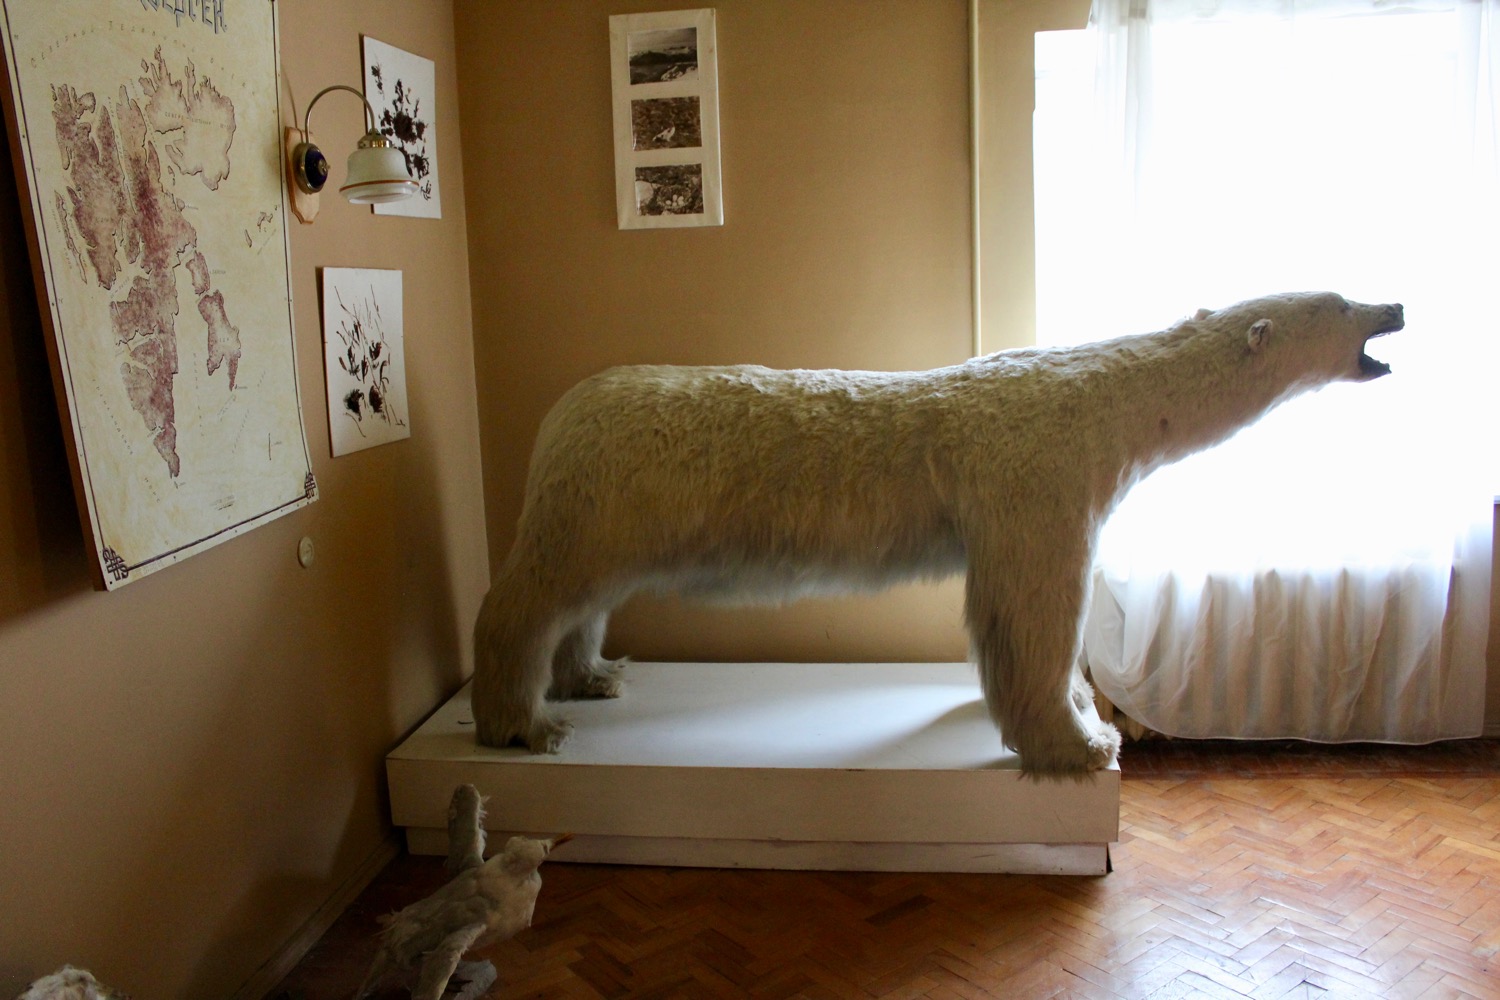 a stuffed polar bear on a platform in a room